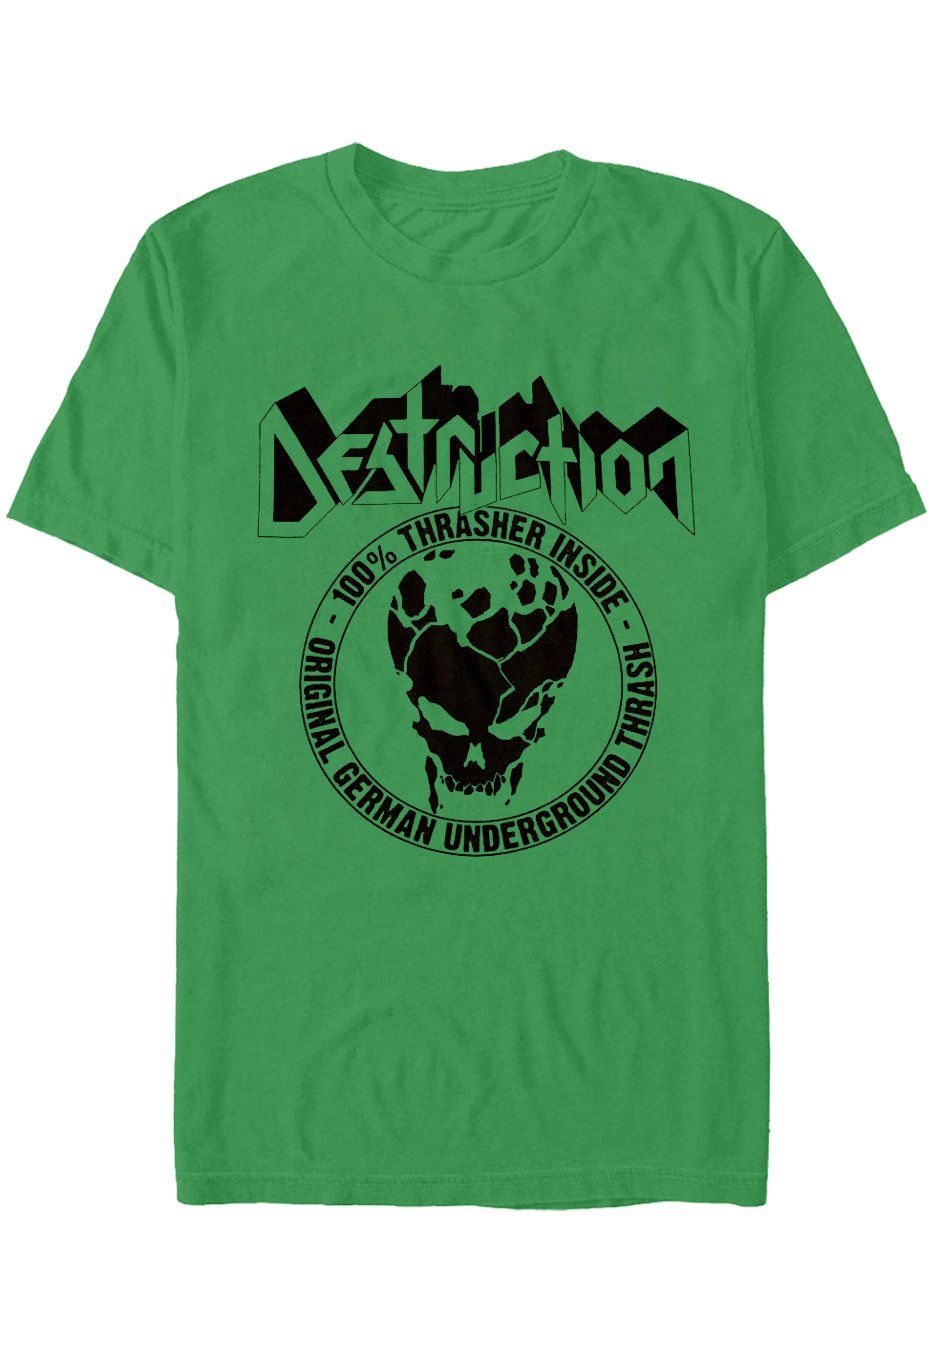 Destruction - 100% Thrasher Inside Green - T-Shirt